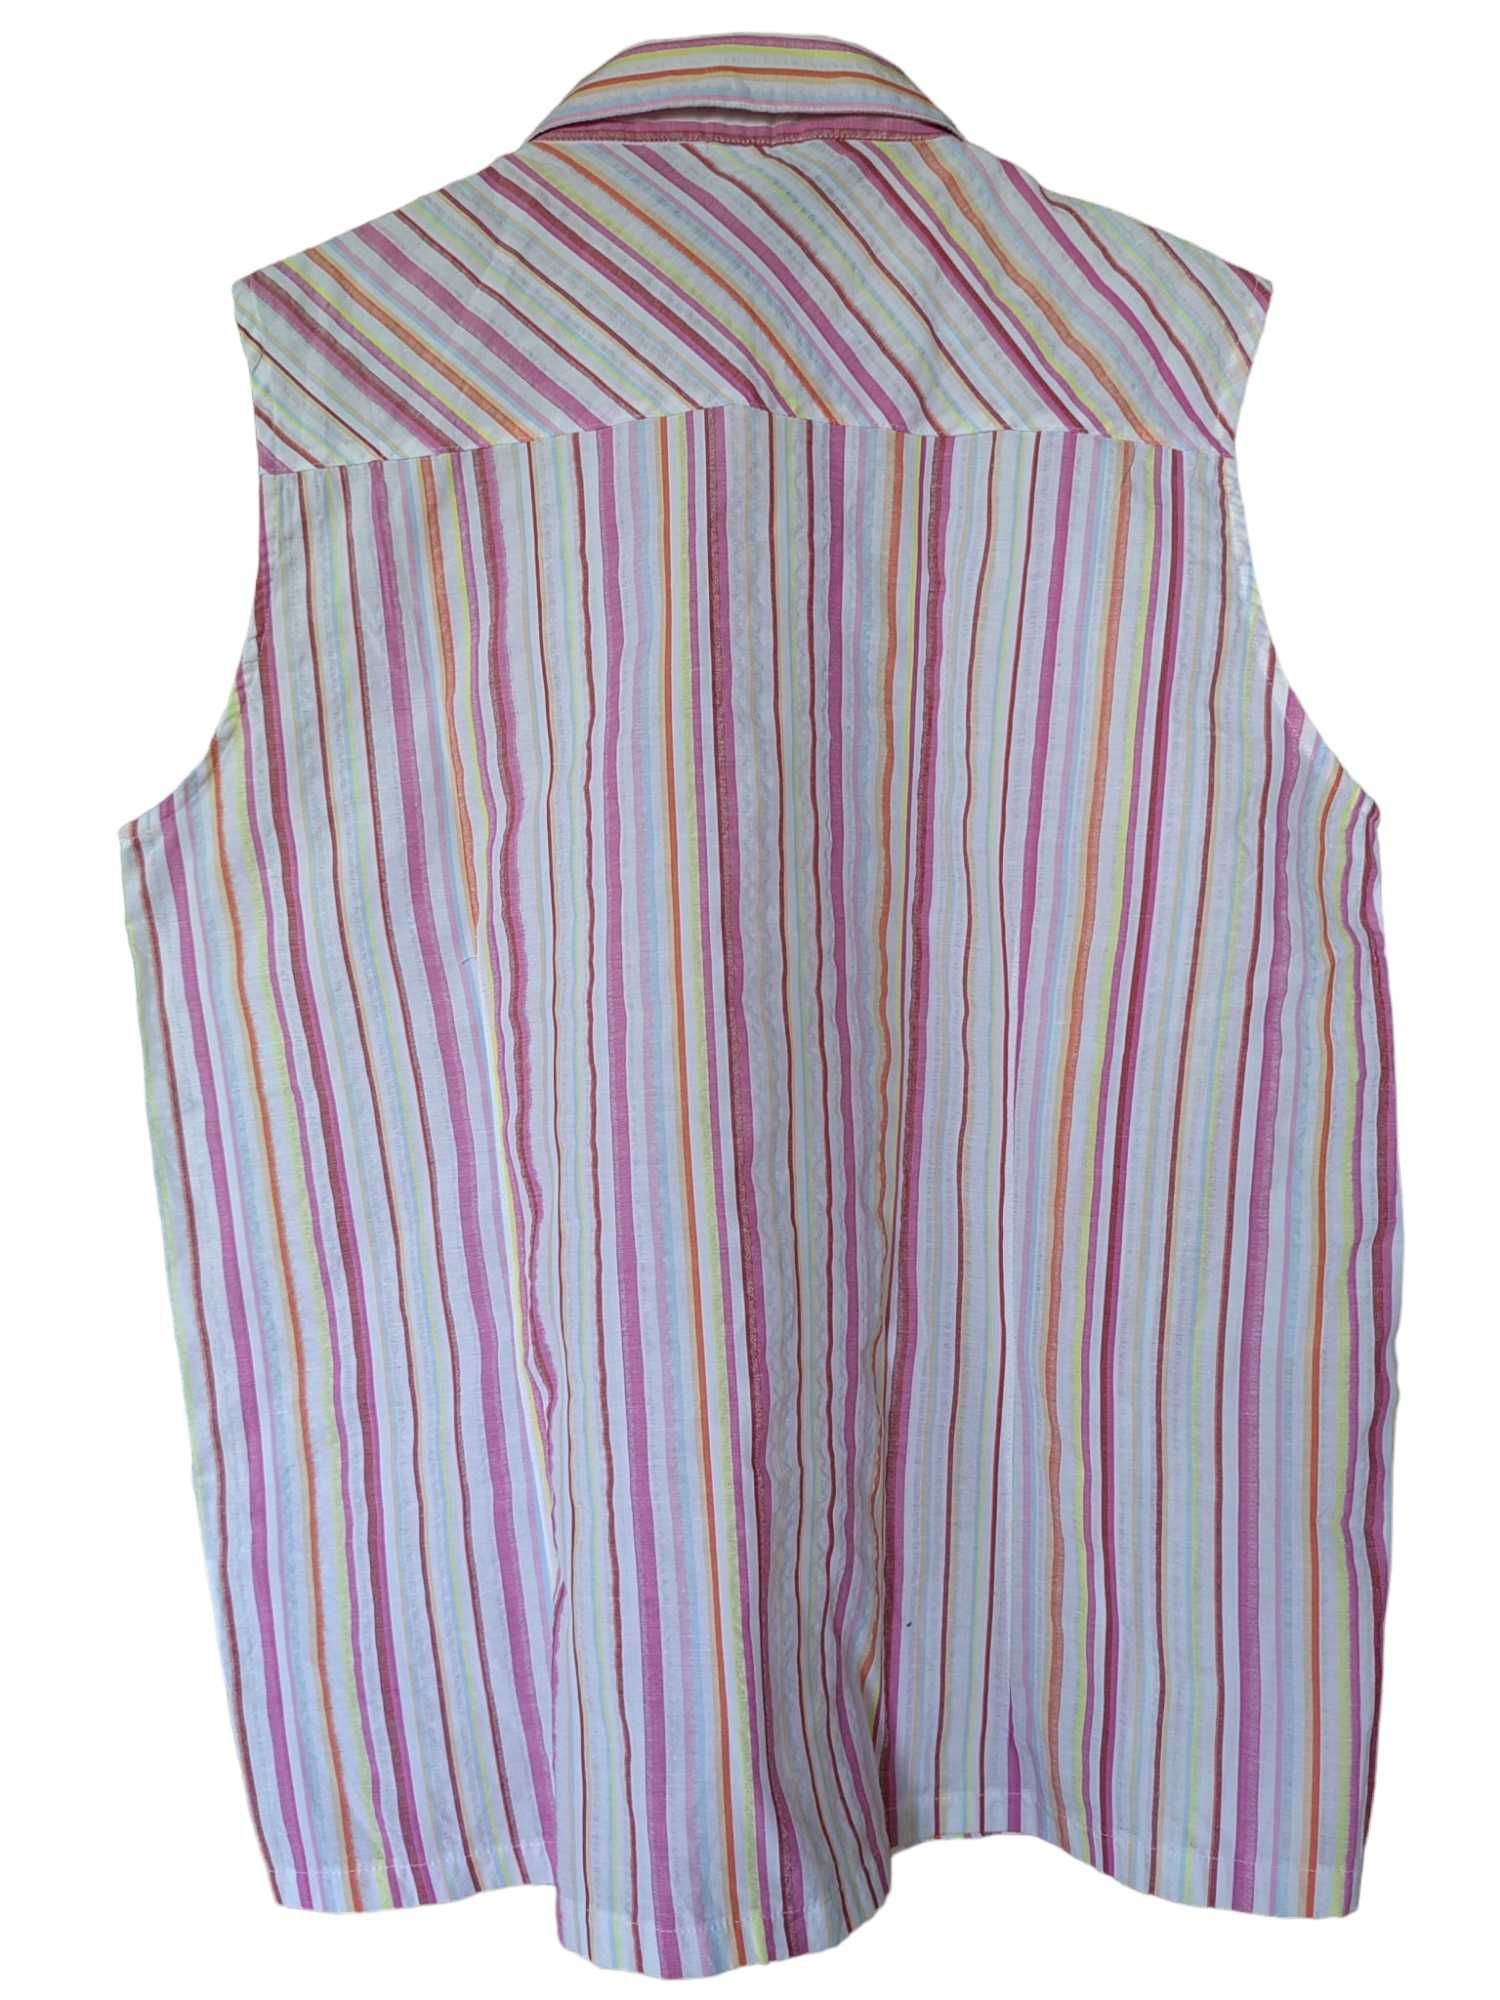 Дамска риза без ръкави Sonja Blanke, Многоцветна, 70x59 см, 44